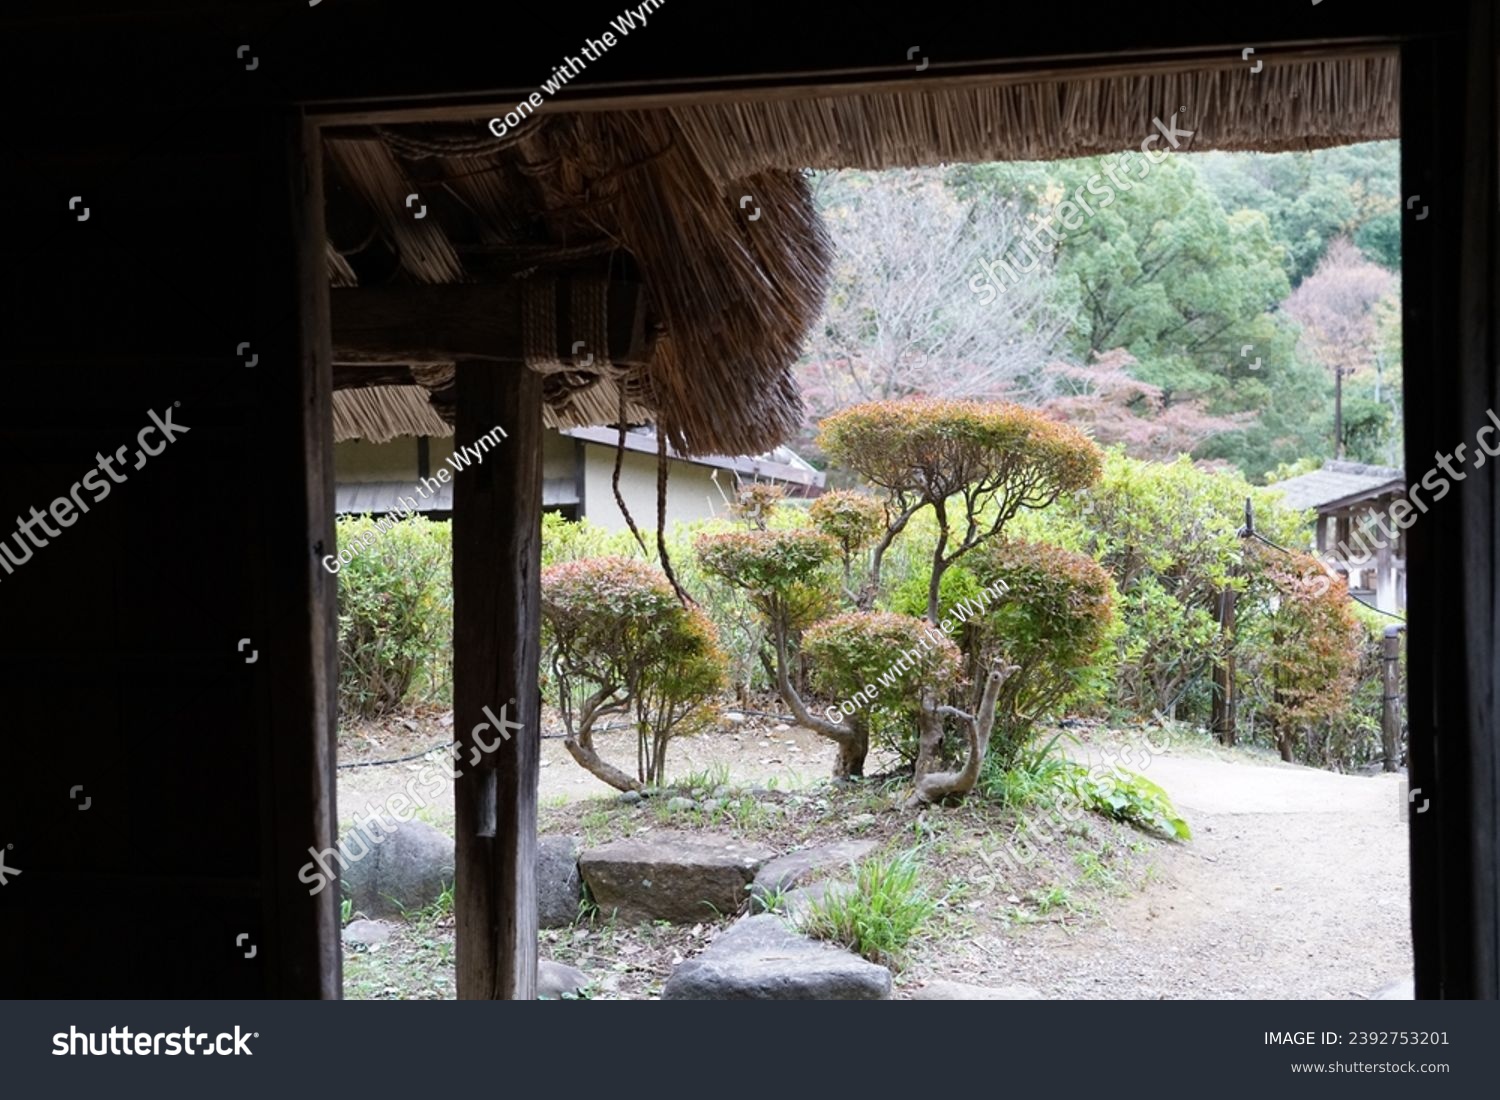 Edo era minimalist interior architecture and landscaping #2392753201